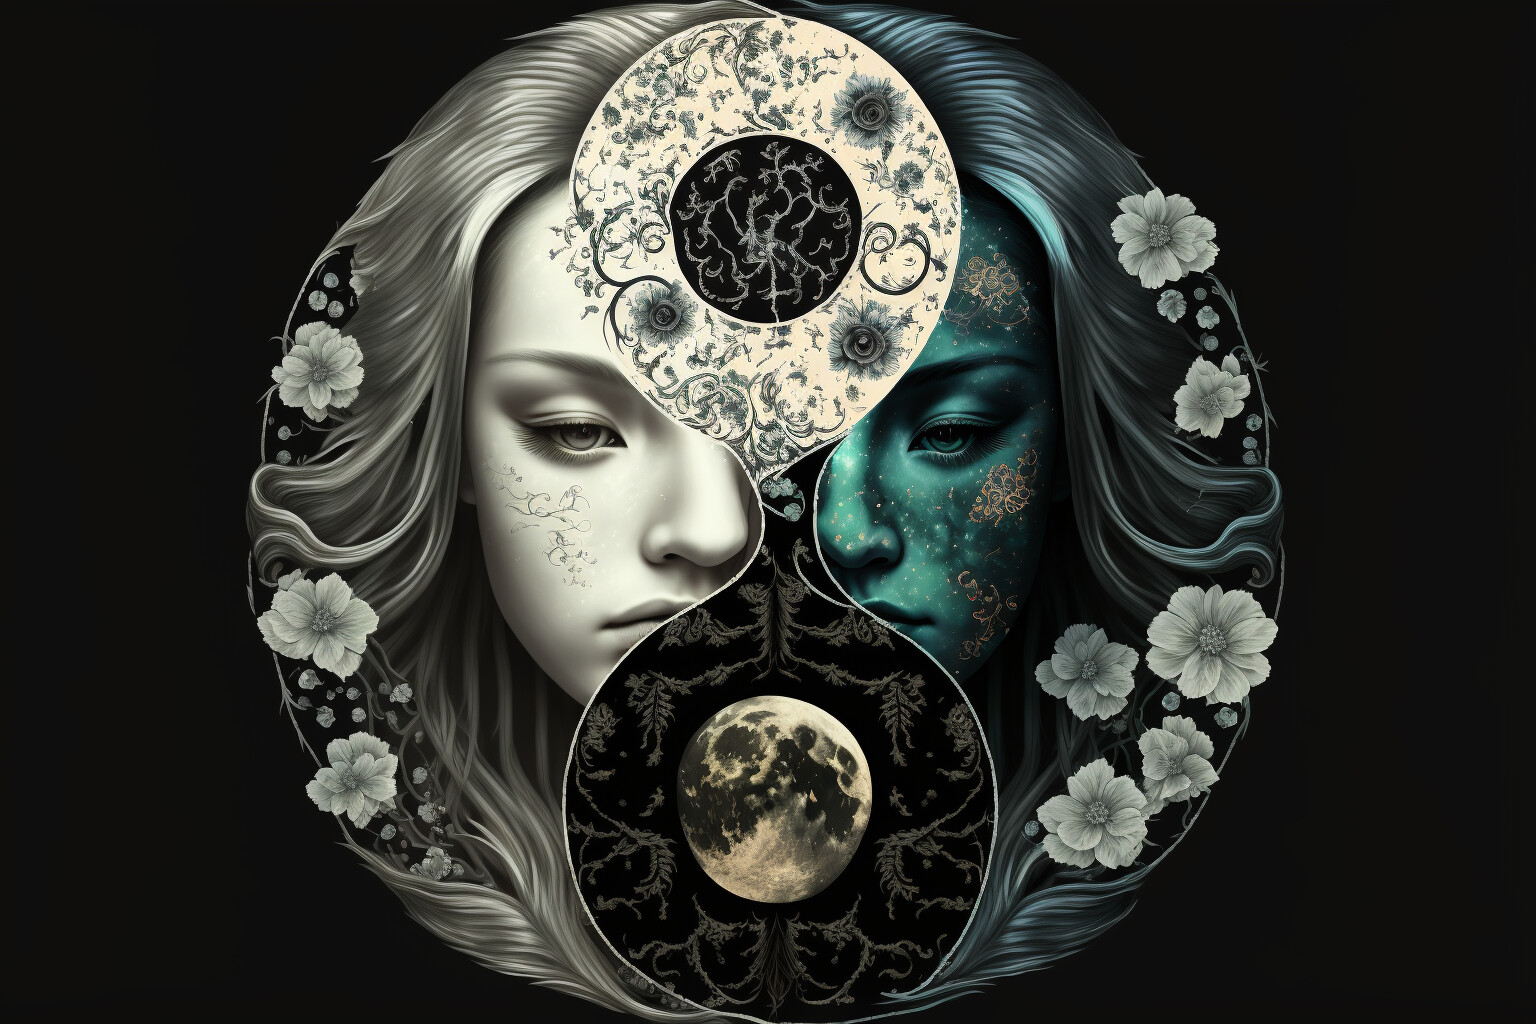 ArtStation - Twins representing the Yin and Yang